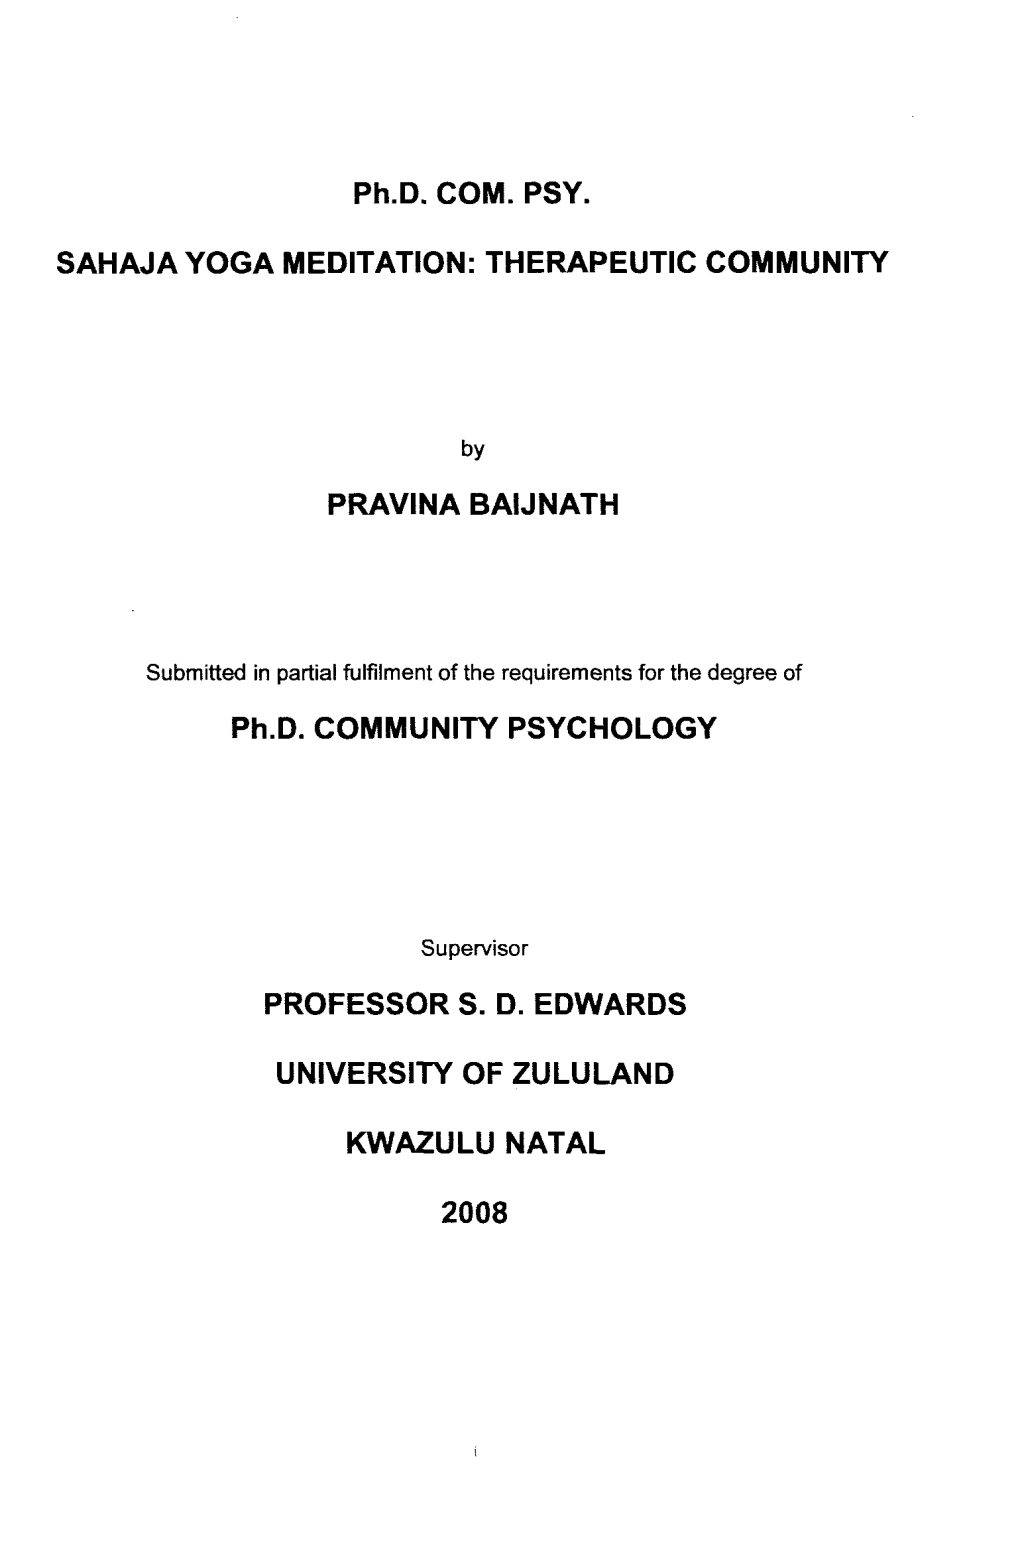 Ph.D. COM. PSY. SAHAJA YOGA MEDITATION